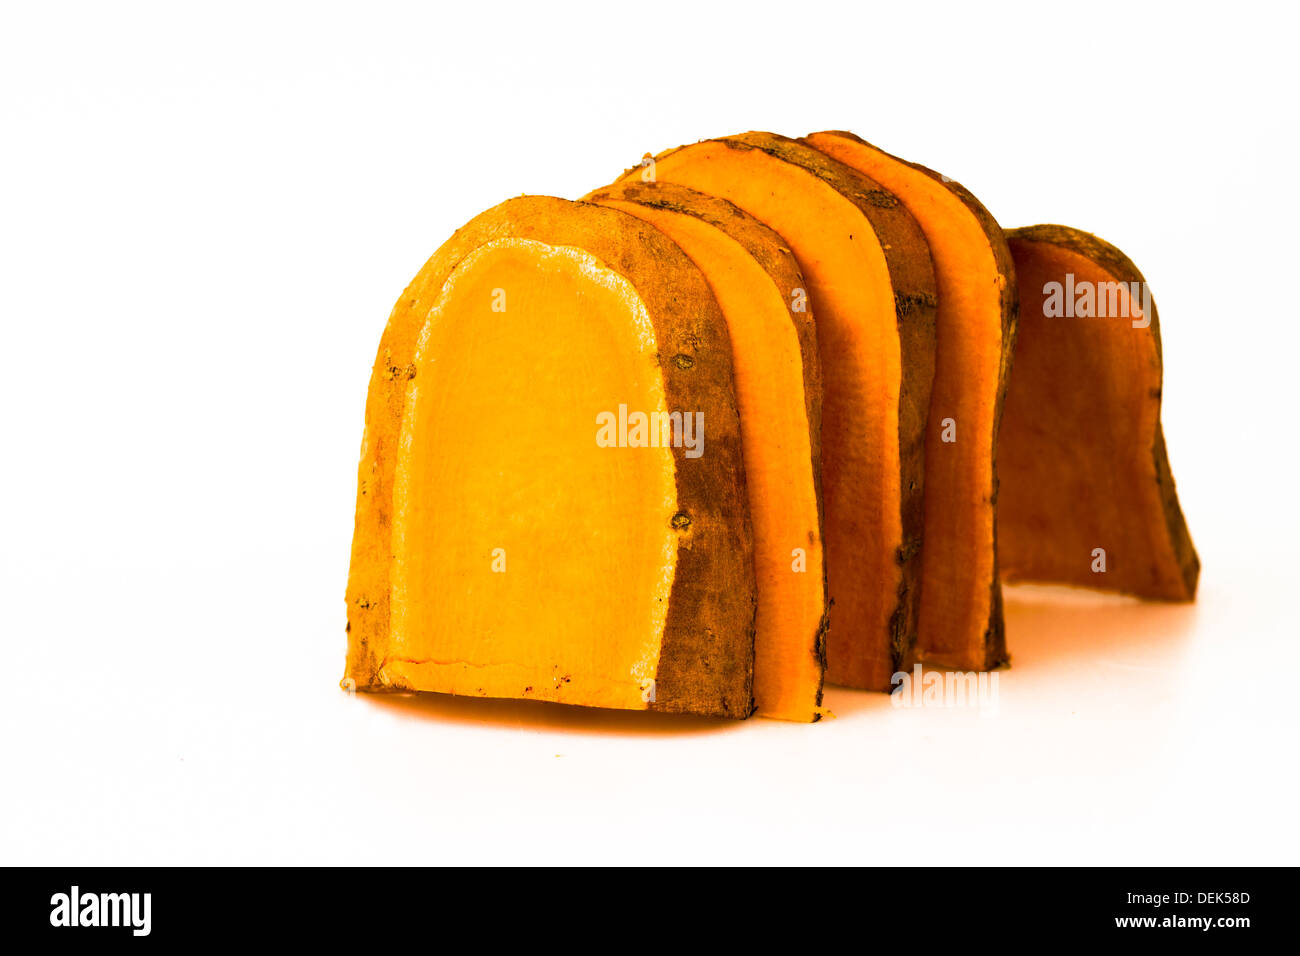 Sweet potato arranged to look like toast Stock Photo